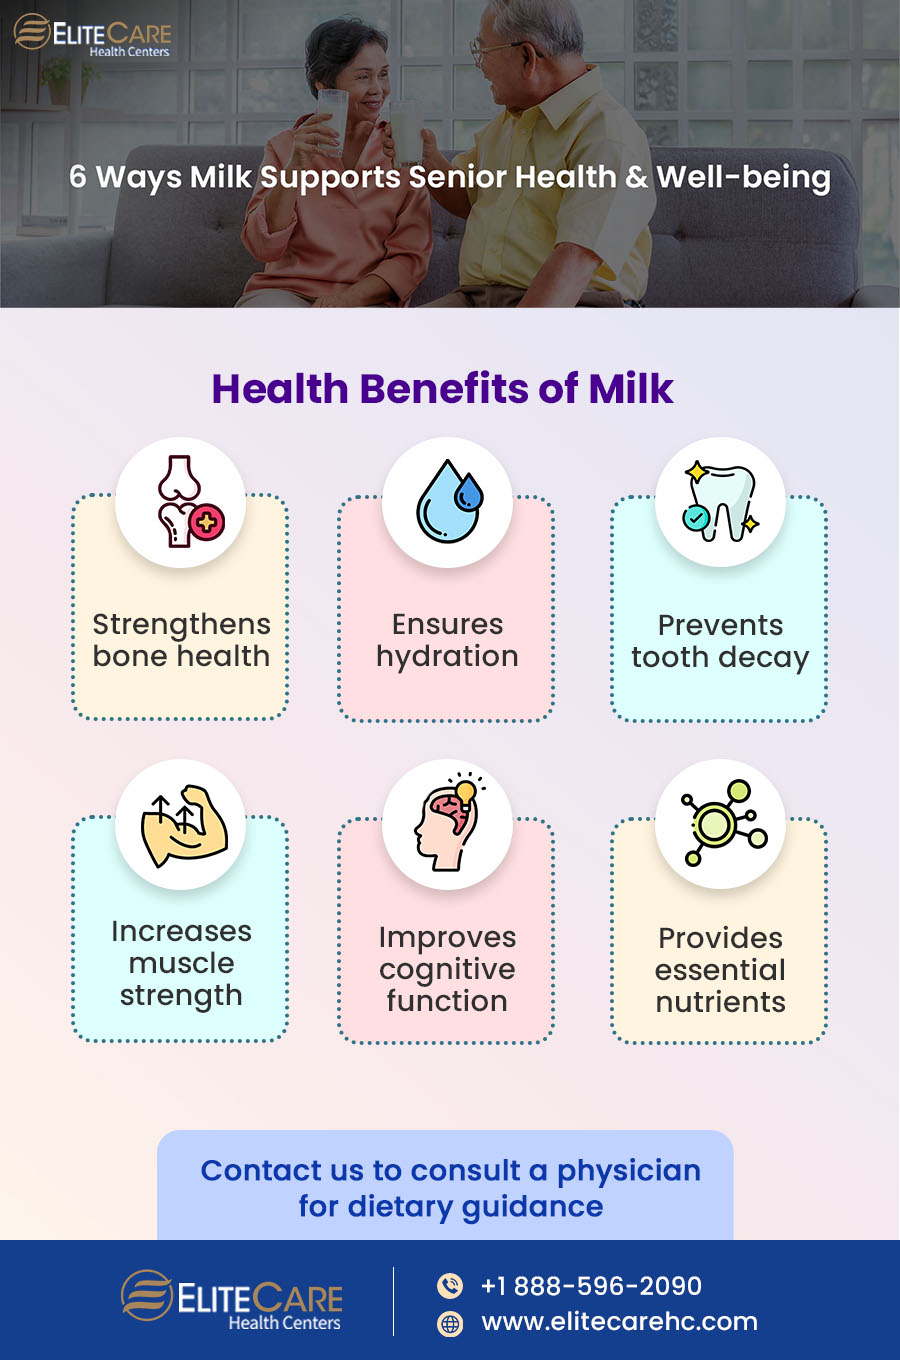 6 Ways Milk Supports Senior Health & Well-Being | Infographic